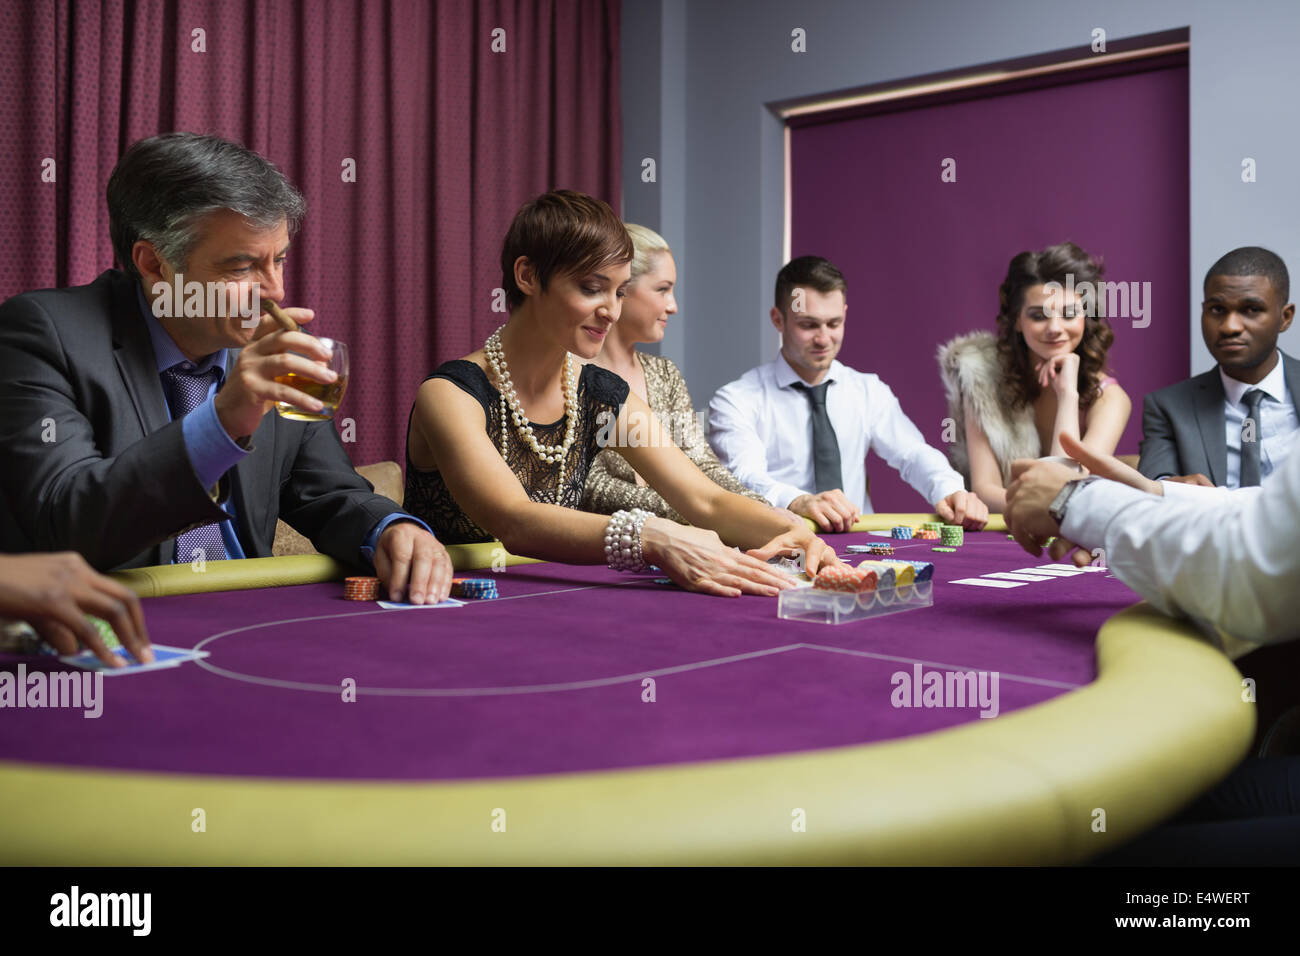 People sitting playing poker Stock Photo